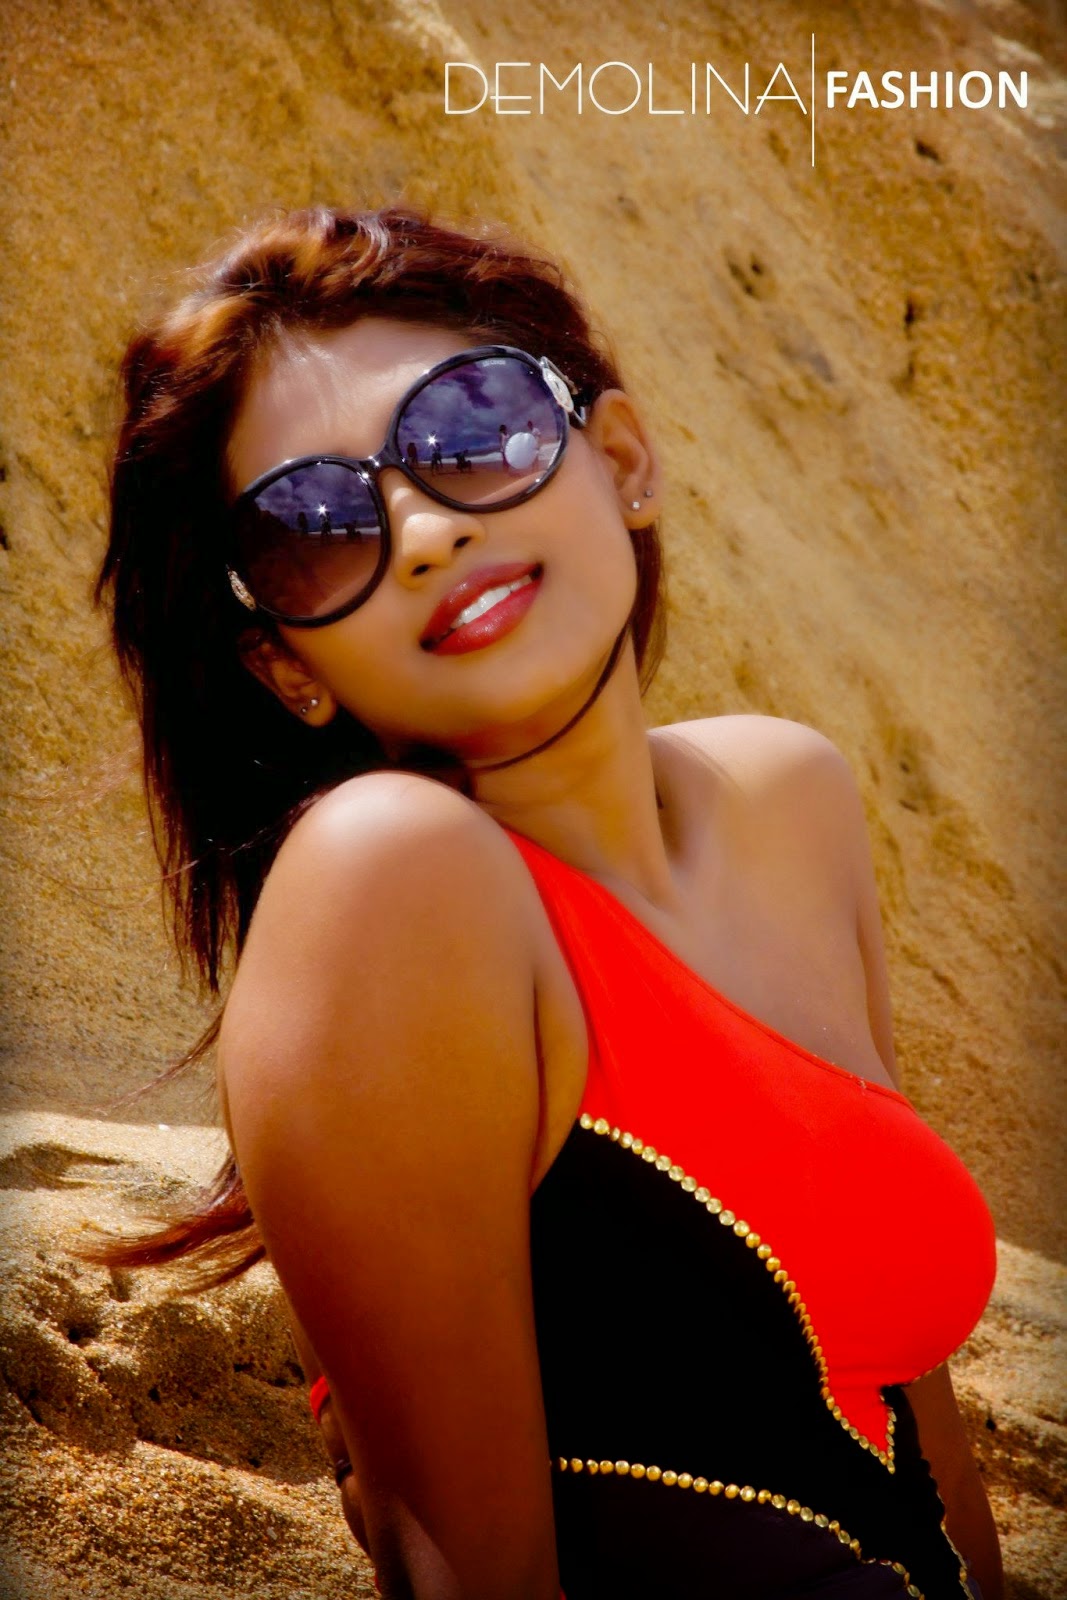 Nadeesha Hemamali- Beauty Lankan star | Sri Lankan Hot 